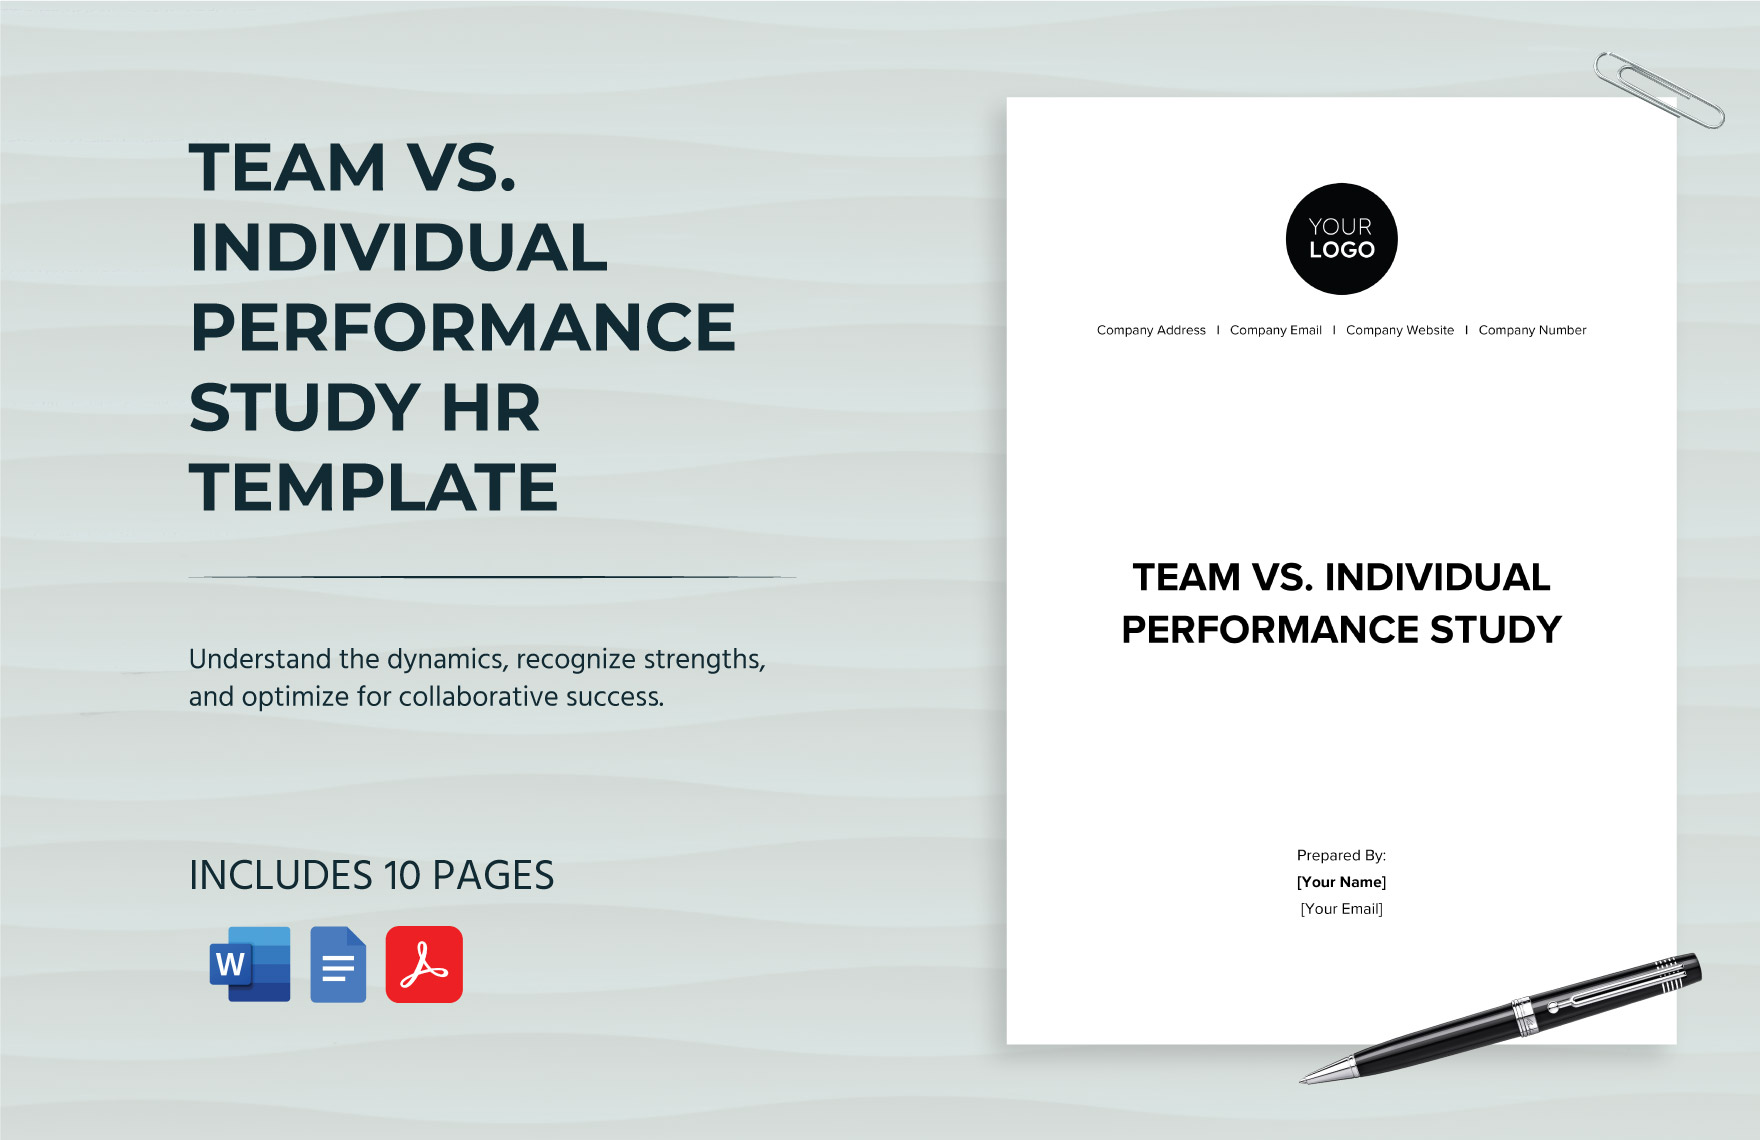 Team vs. Individual Performance Study HR Template